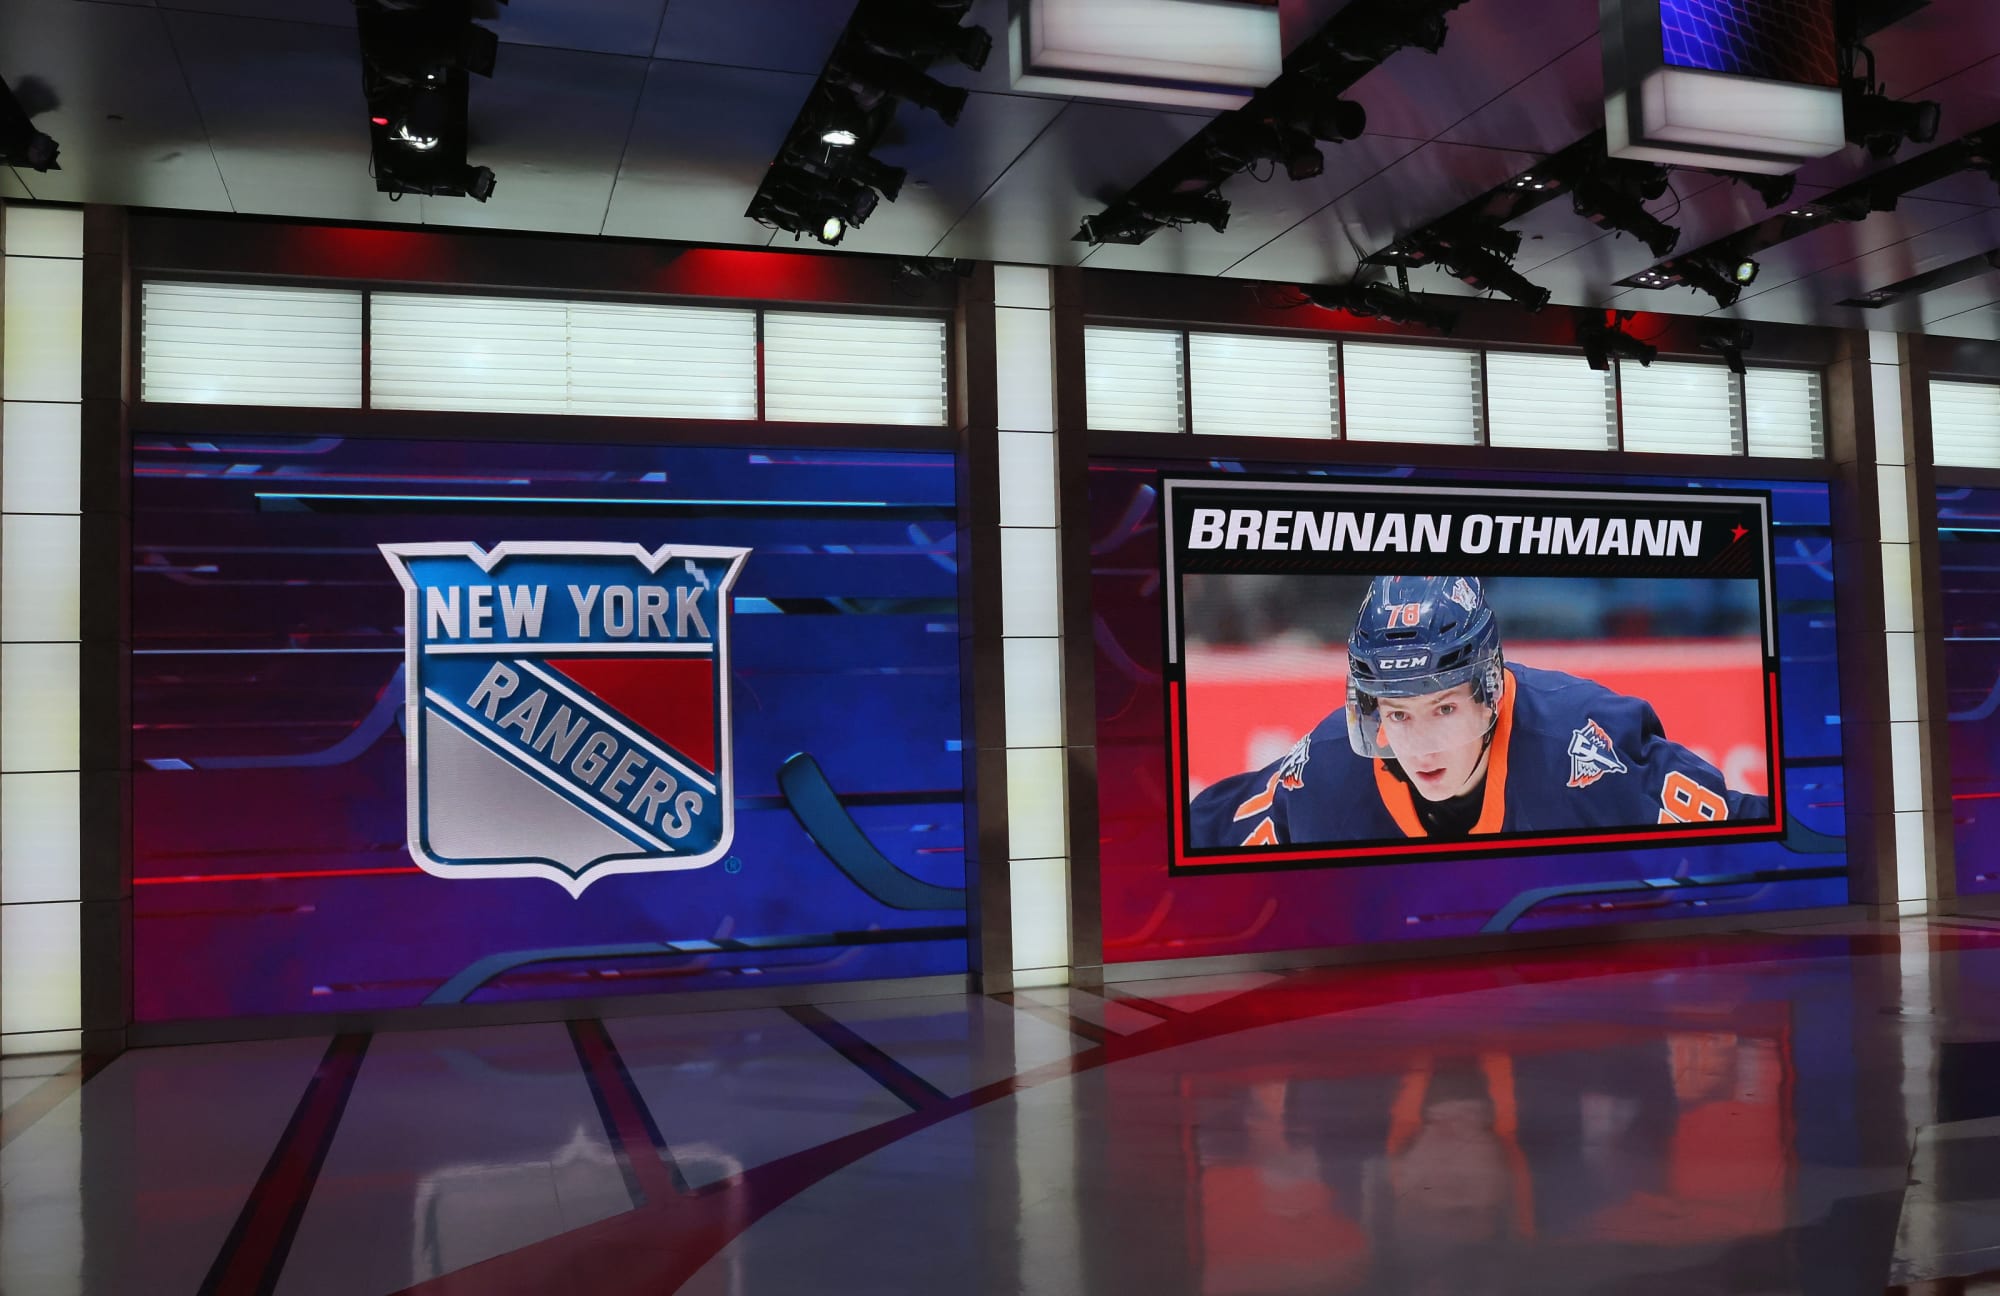 New York Rangers sign top draft pick Brennan Othmann